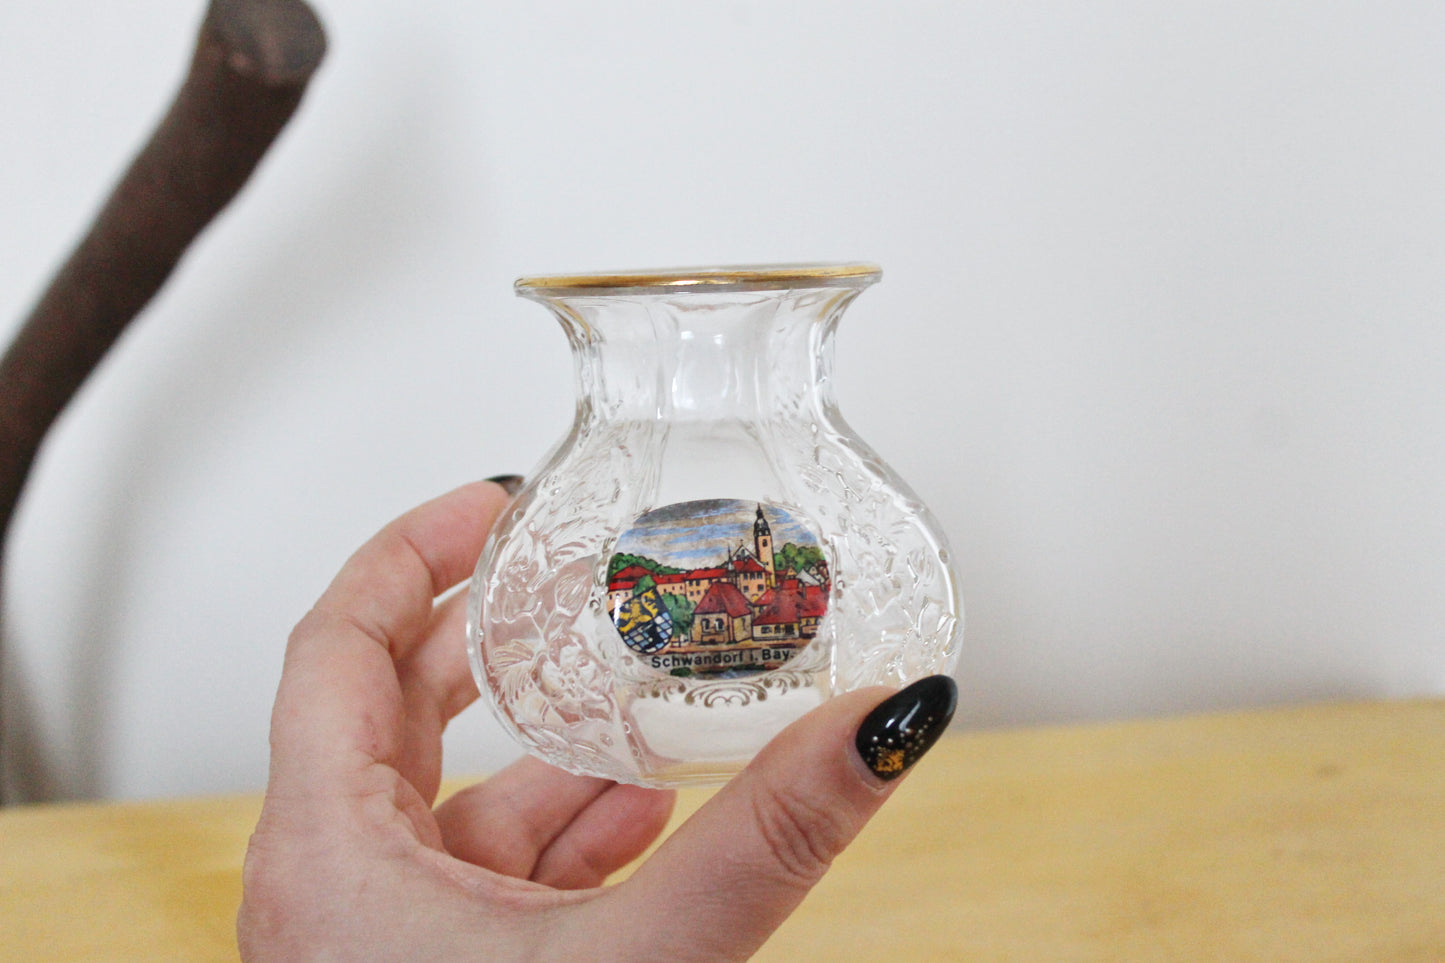 Small vintage glass vase 3.5 inches - Schwandorf - beautiful vintage vase - Germany small vase - home decor vase - 1980s